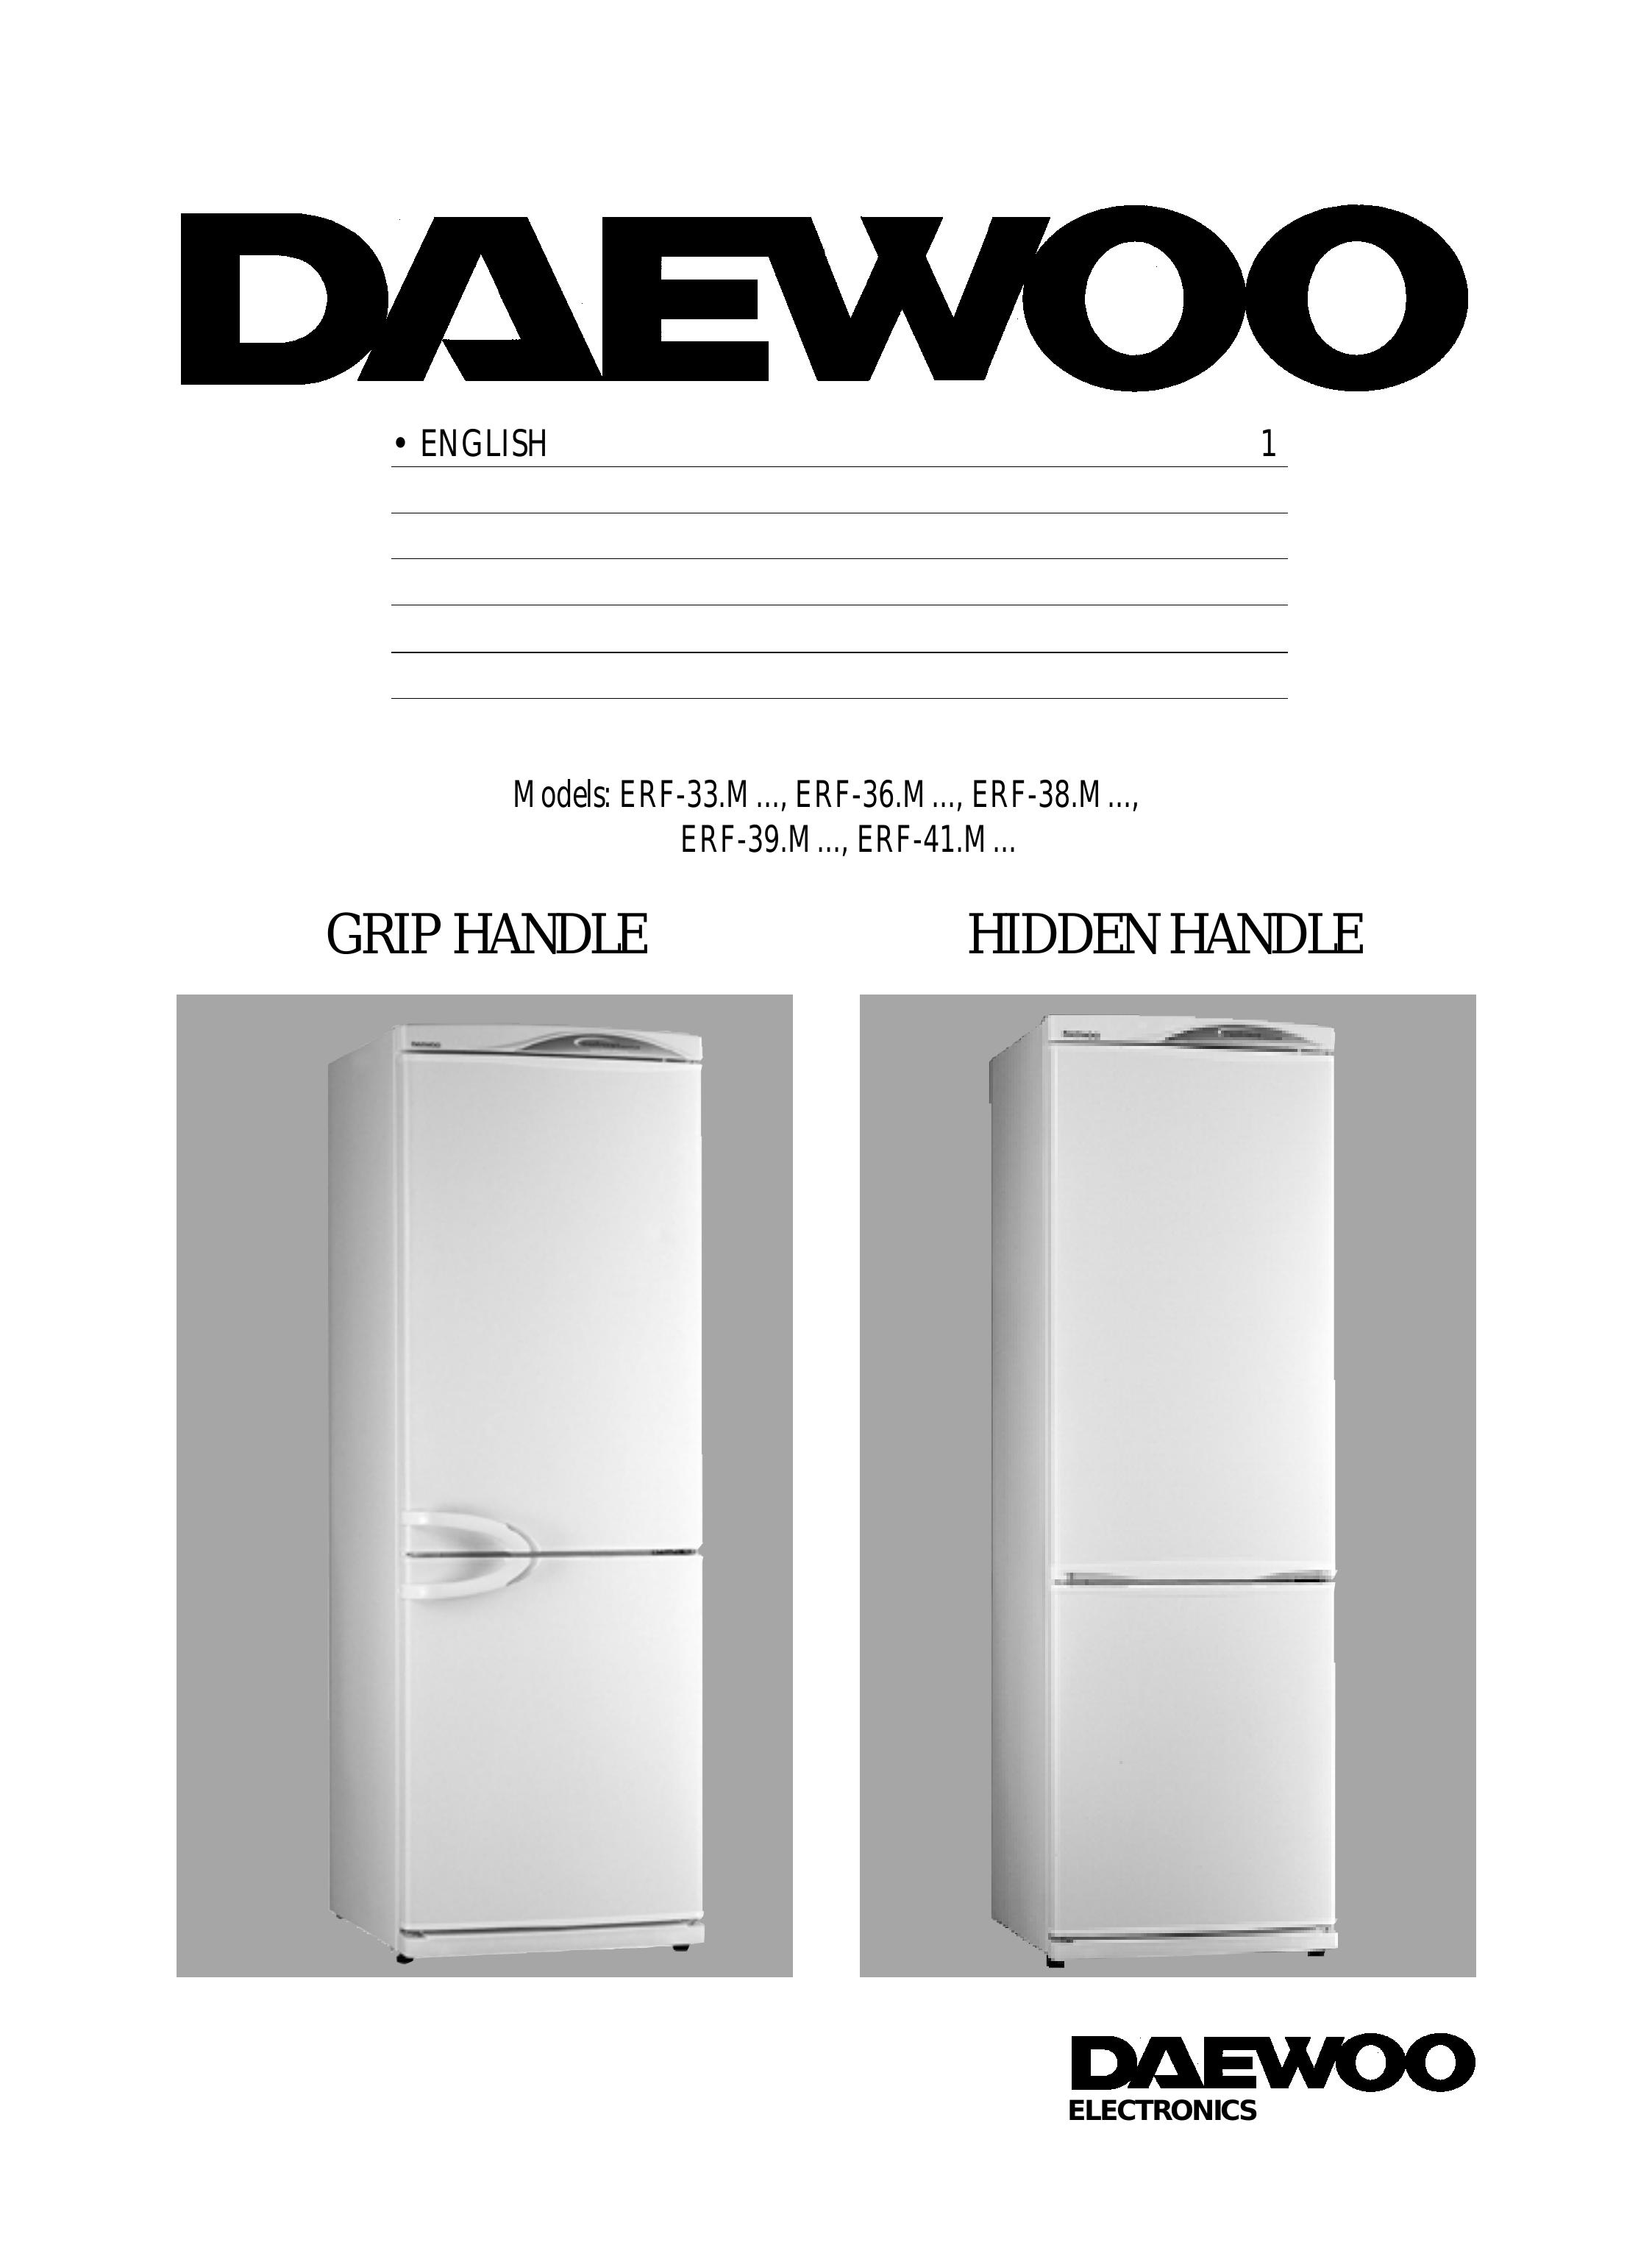 Daewoo ERF-38.M Refrigerator User Manual